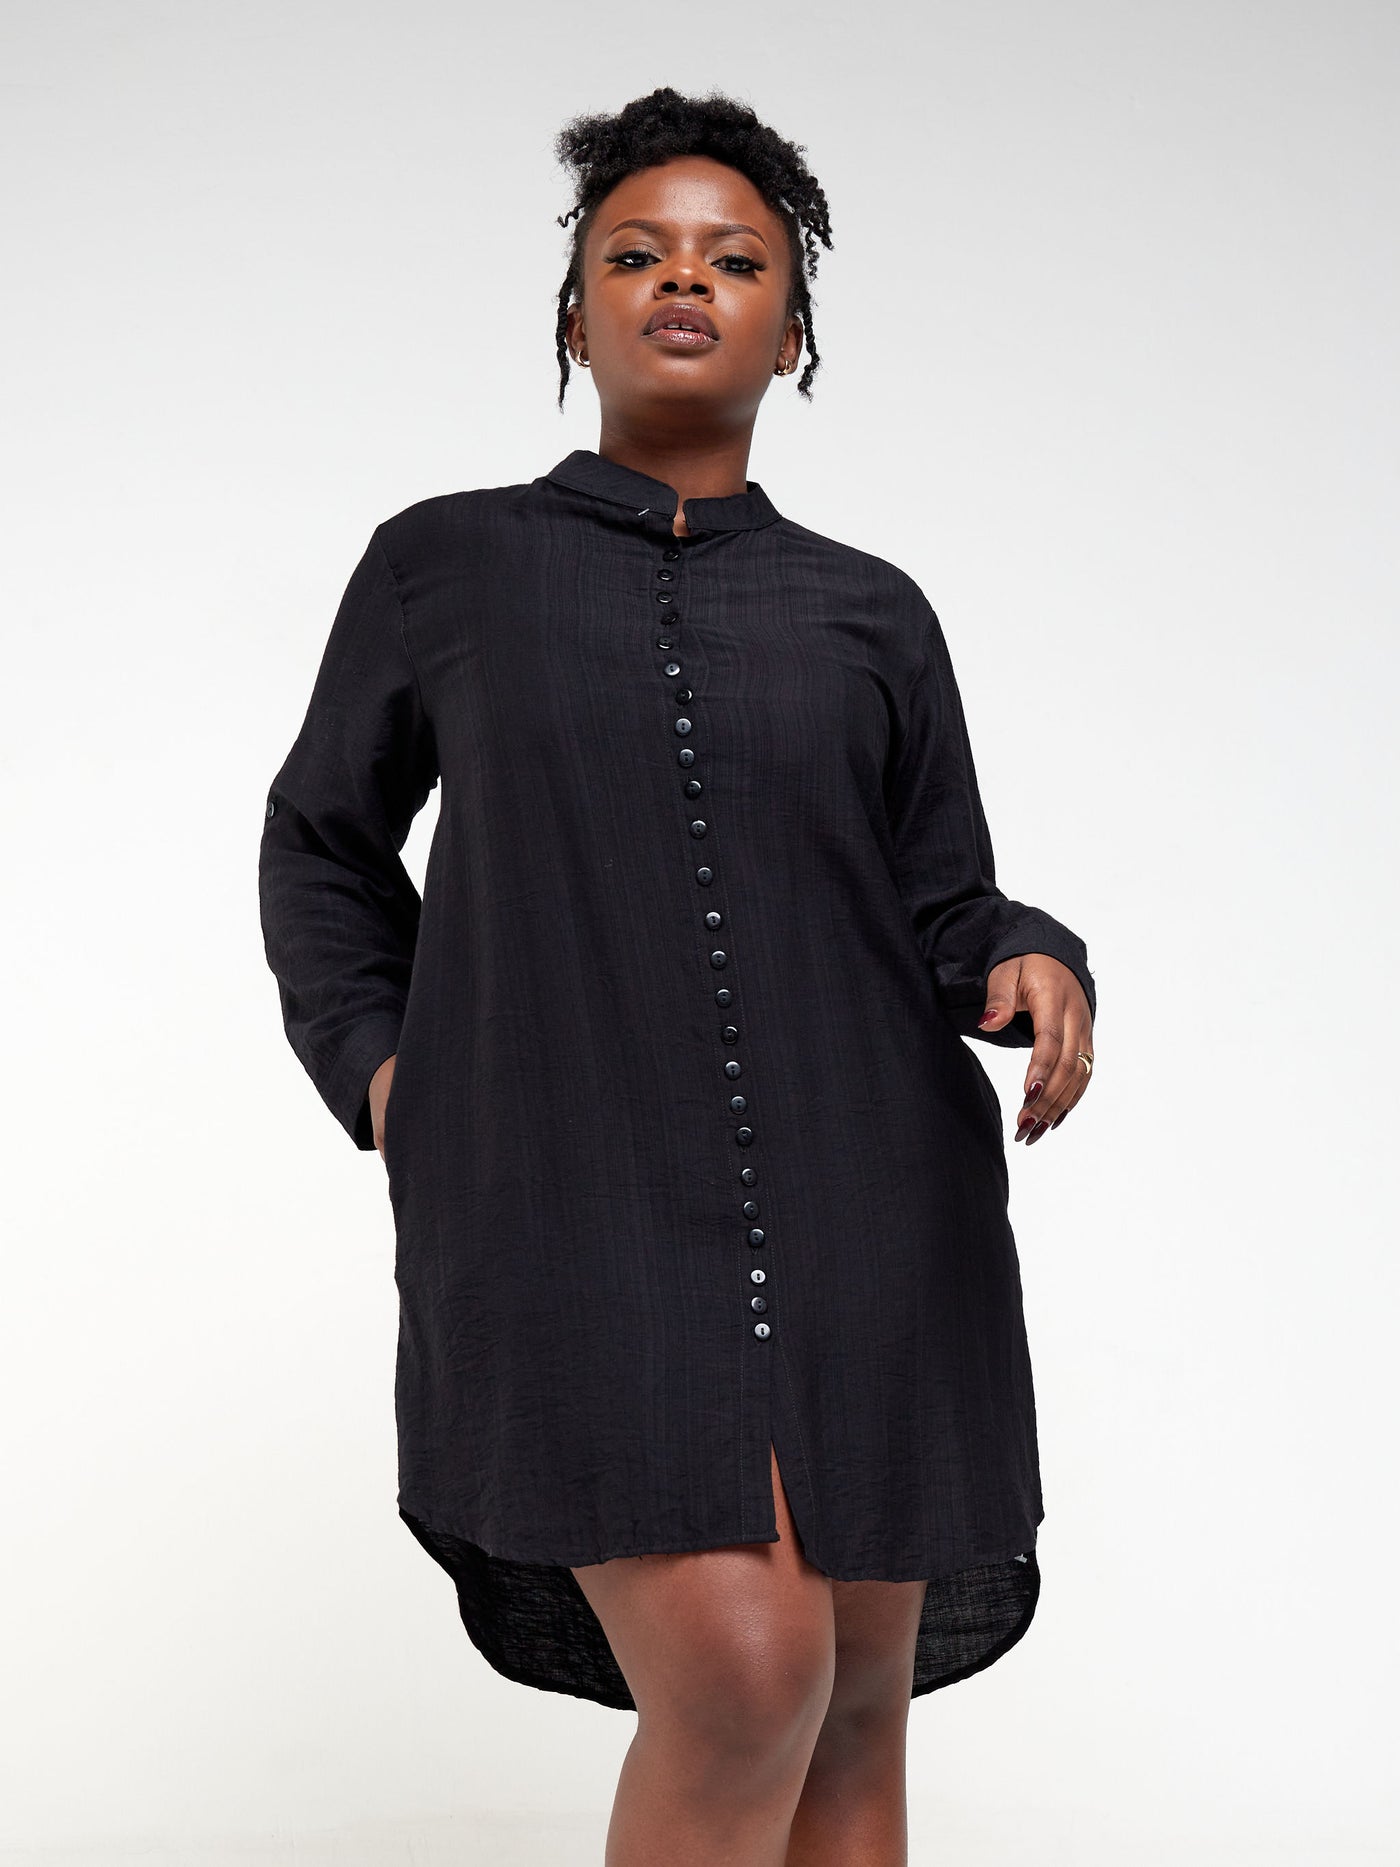 Alara Long Sleeve Mandarin Neck Shirt with Button Details and Pockets - Black